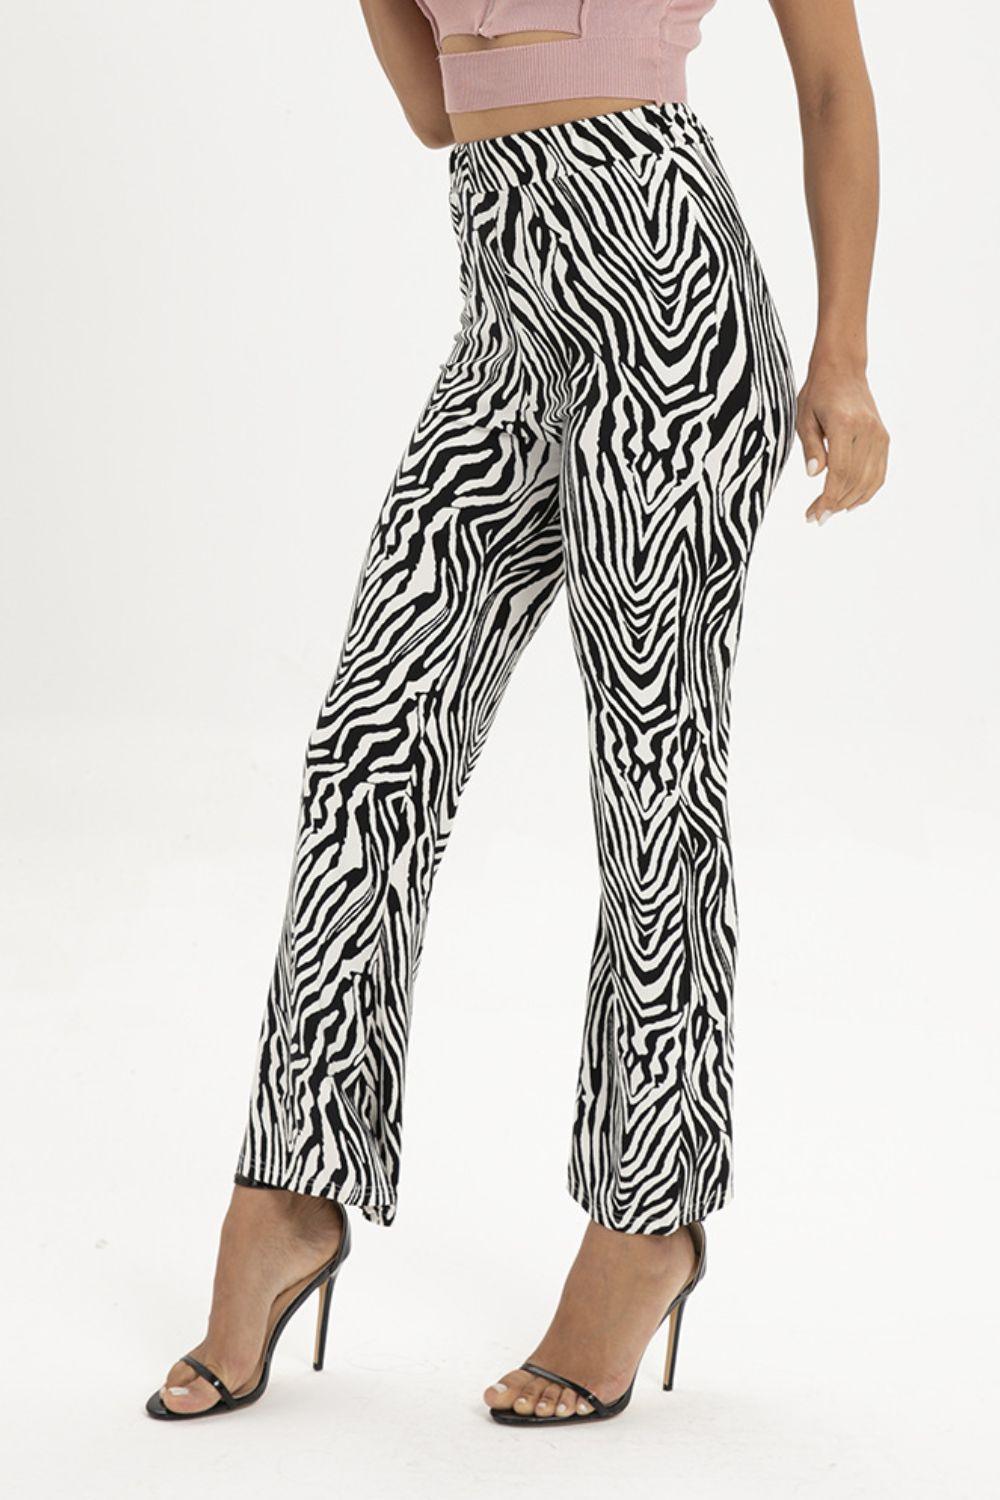 Be Bold High Waist Straight Leg Zebra Print Pants - MXSTUDIO.COM